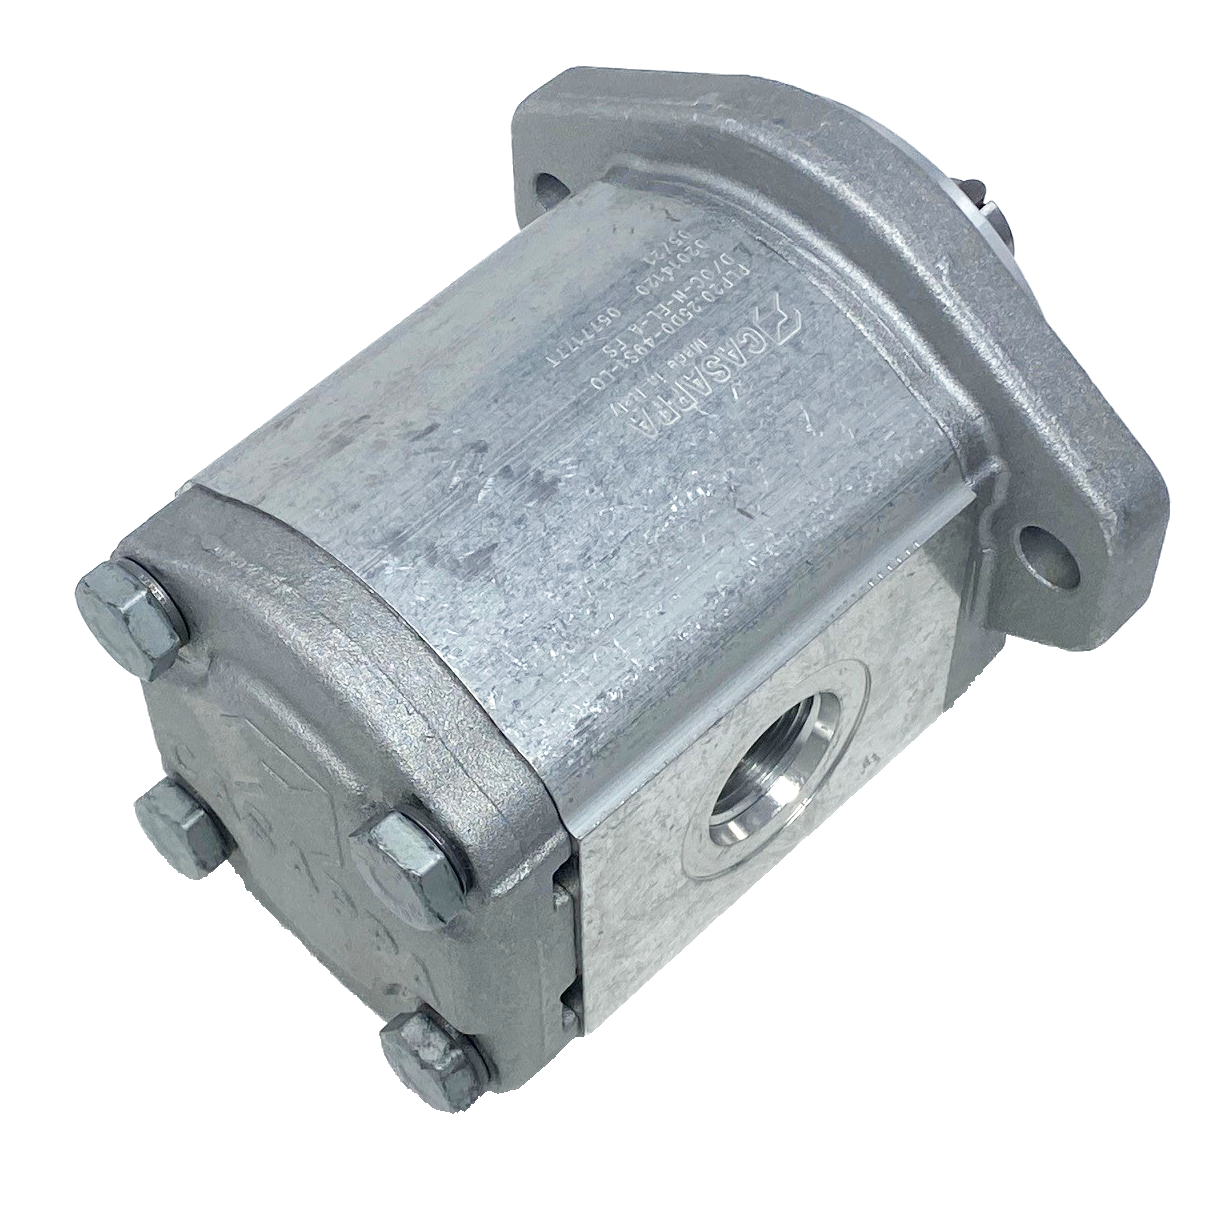 PLM20.25B0-50S1-LOC/OD-N-EL : Casappa Polaris Gear Motor, 26.42cc, 2465psi Rated, 3045RPM, Reversible Interior Drain, 3/4" Bore x 3/16" Key Shaft, SAE A 2-Bolt Flange, 0.625 (5/8") #10 SAE Inlet, 0.75 (3/4") #12 SAE Outlet, Aluminum Body & Flange